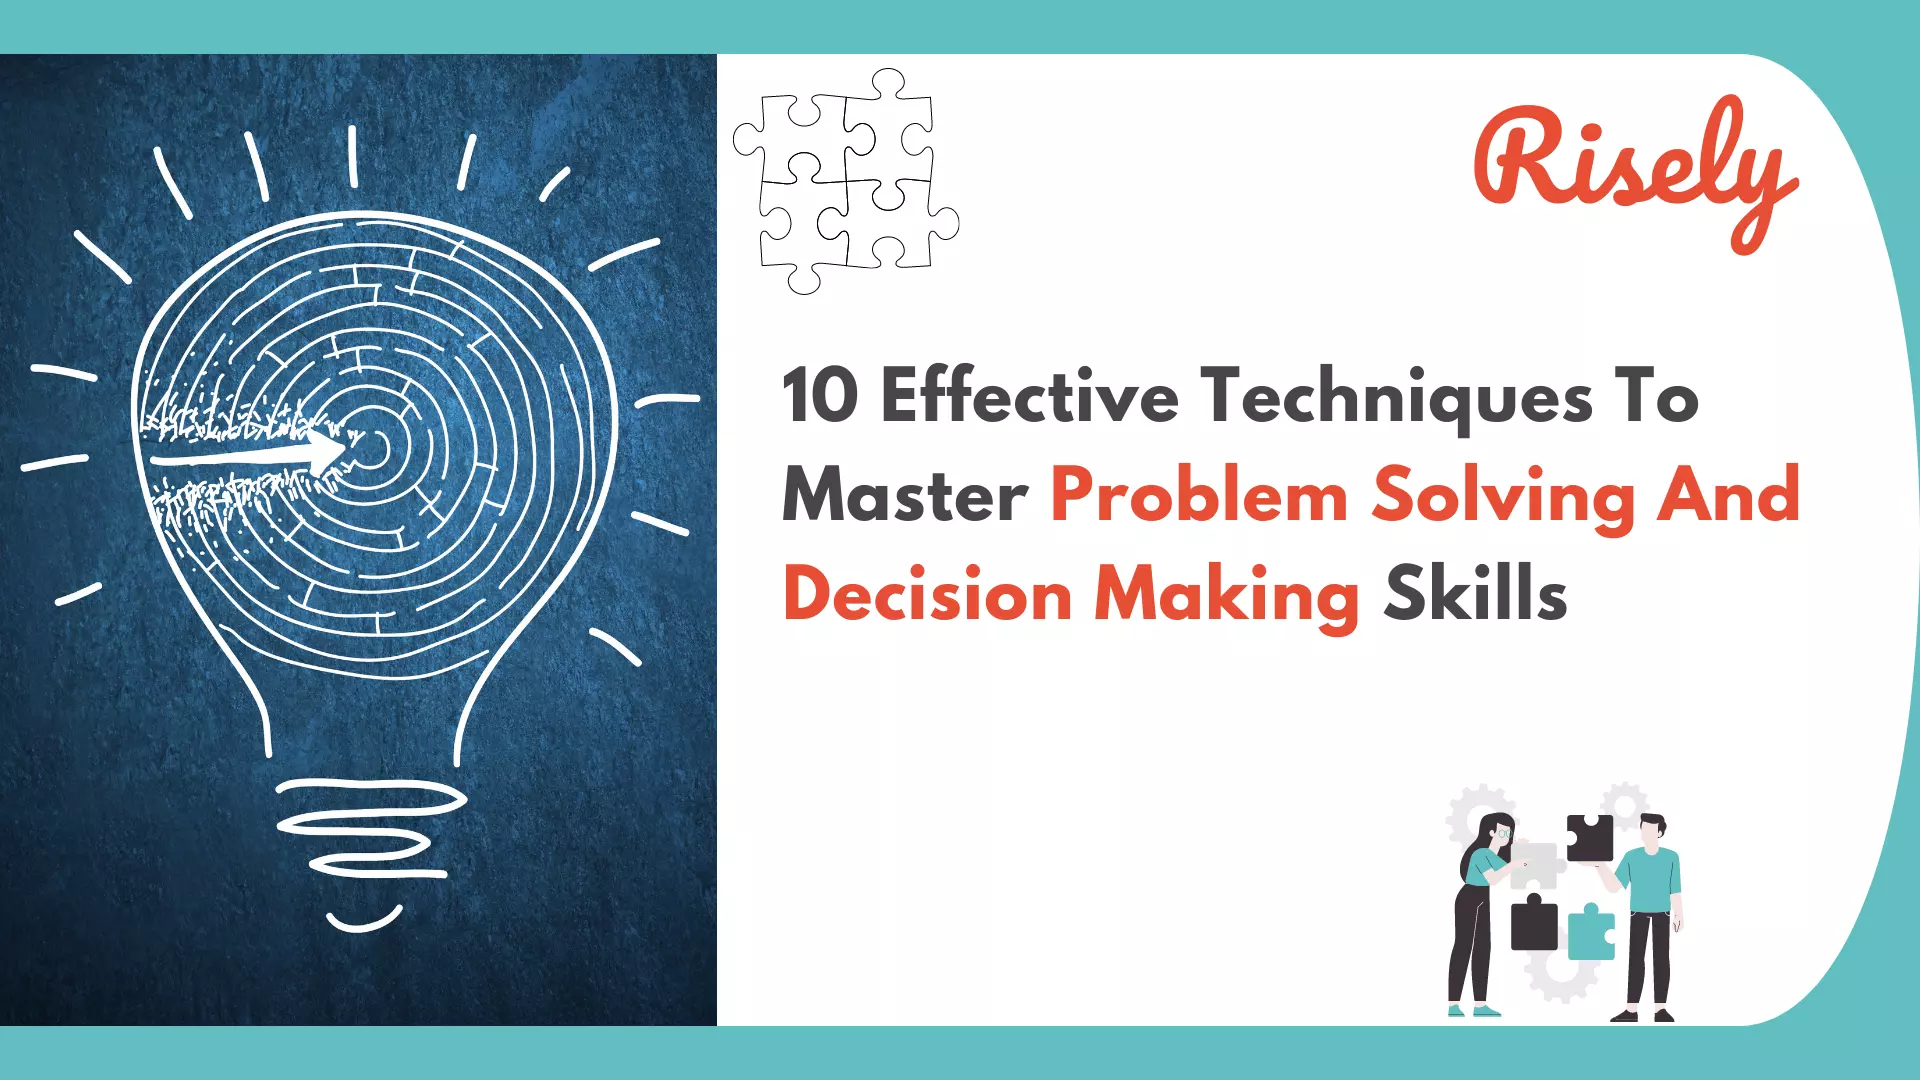 decision making & problem solving skills